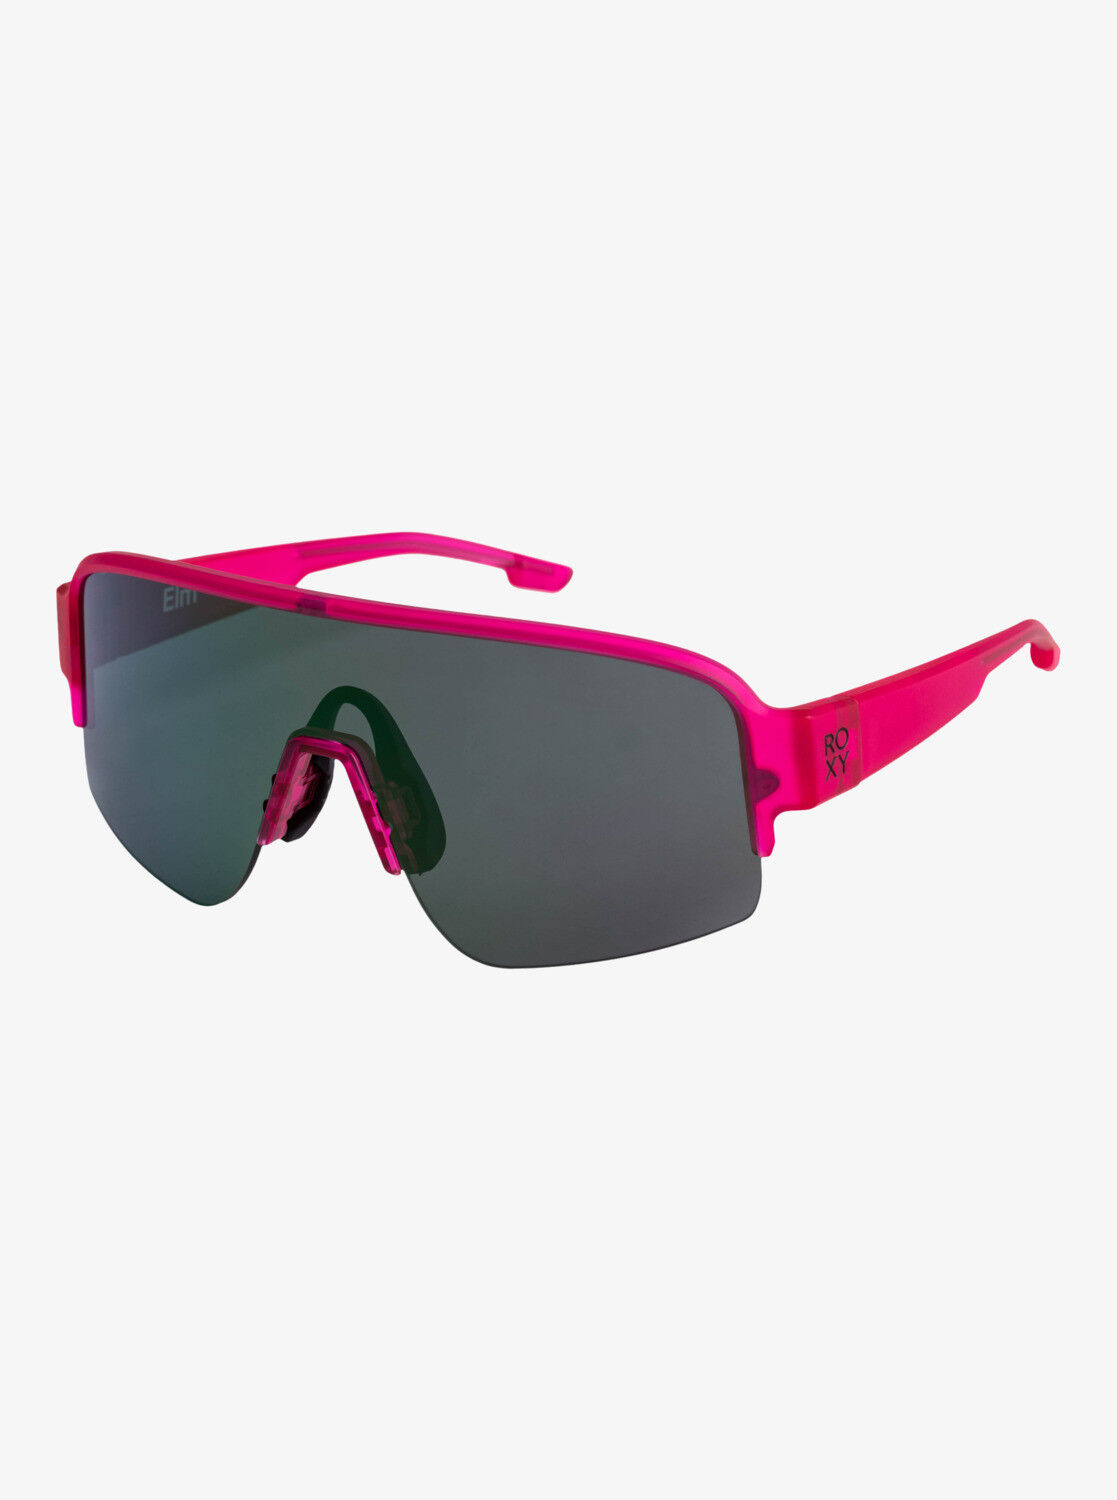 Roxy Elm - Sunglasses - Women's | Hardloop